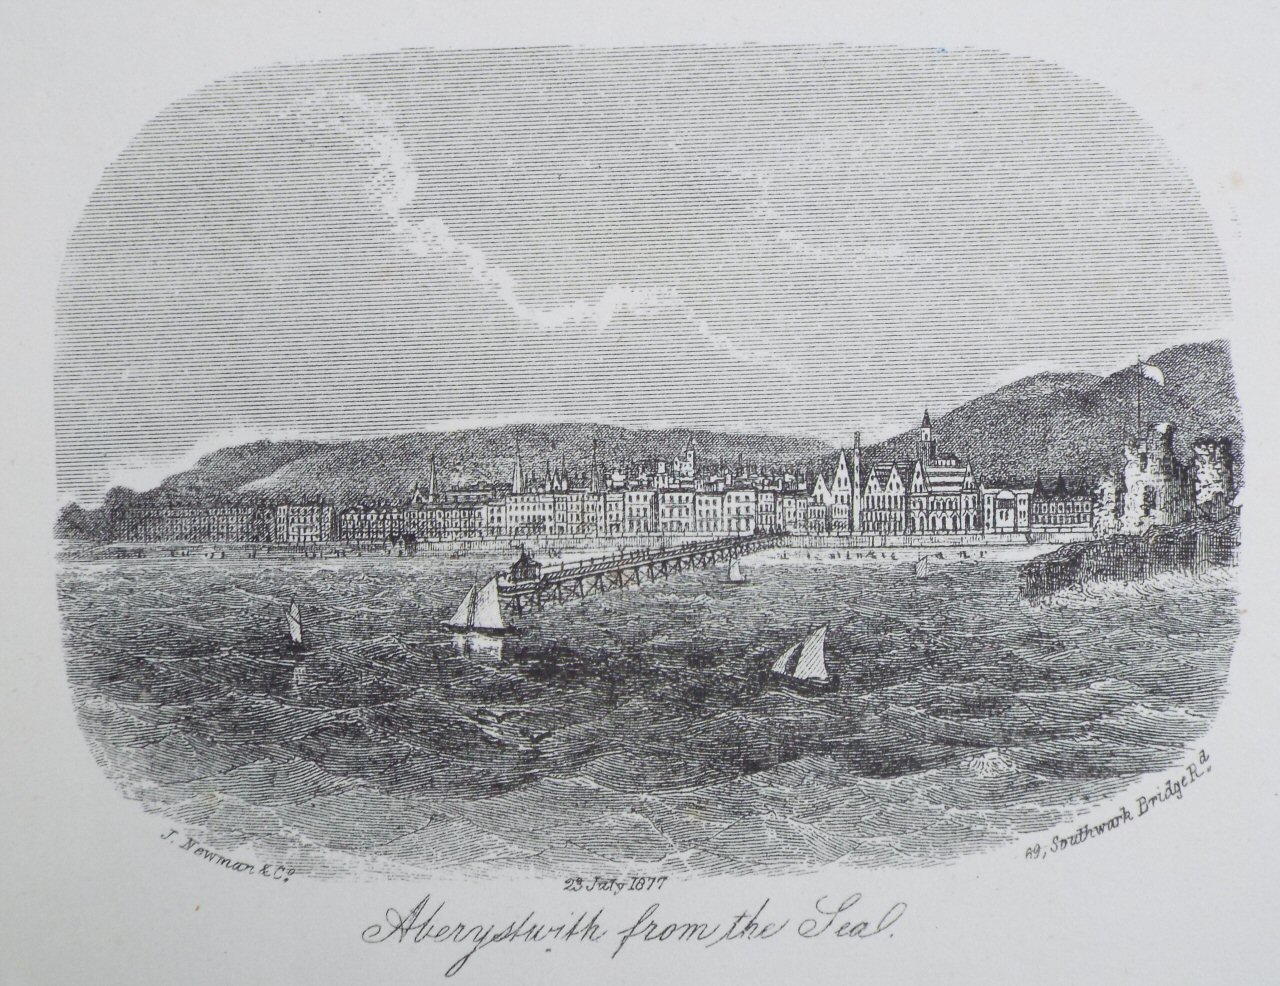 Steel Vignette - Aberystwyth from th Sea. - Newman